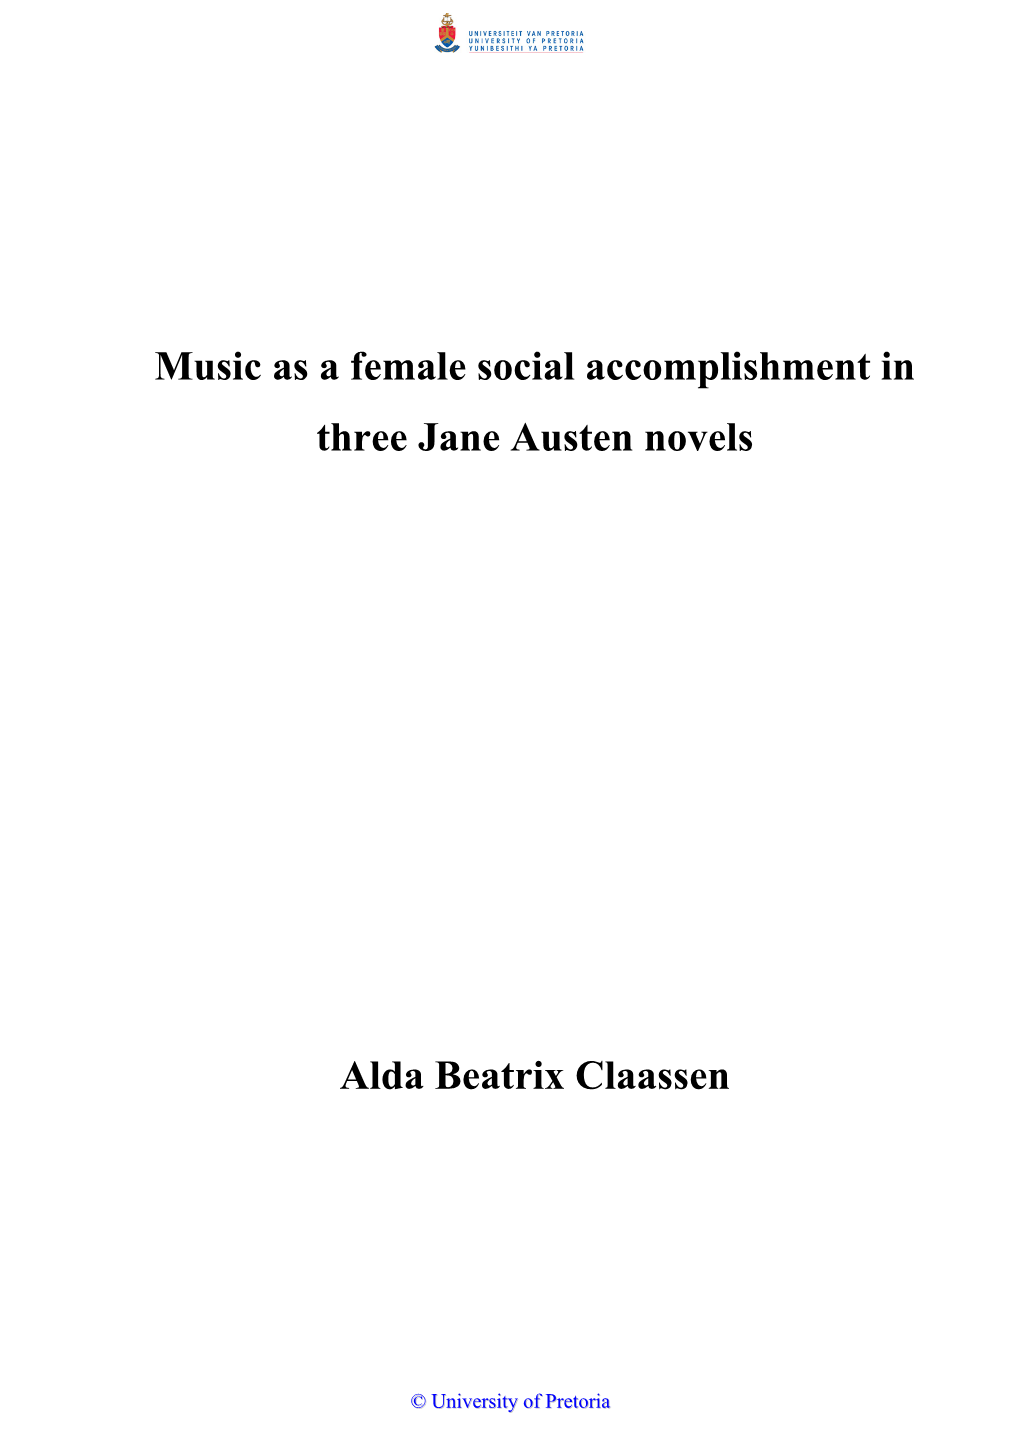 Music As a Female Social Accomplishment in Three Jane Austen Novels